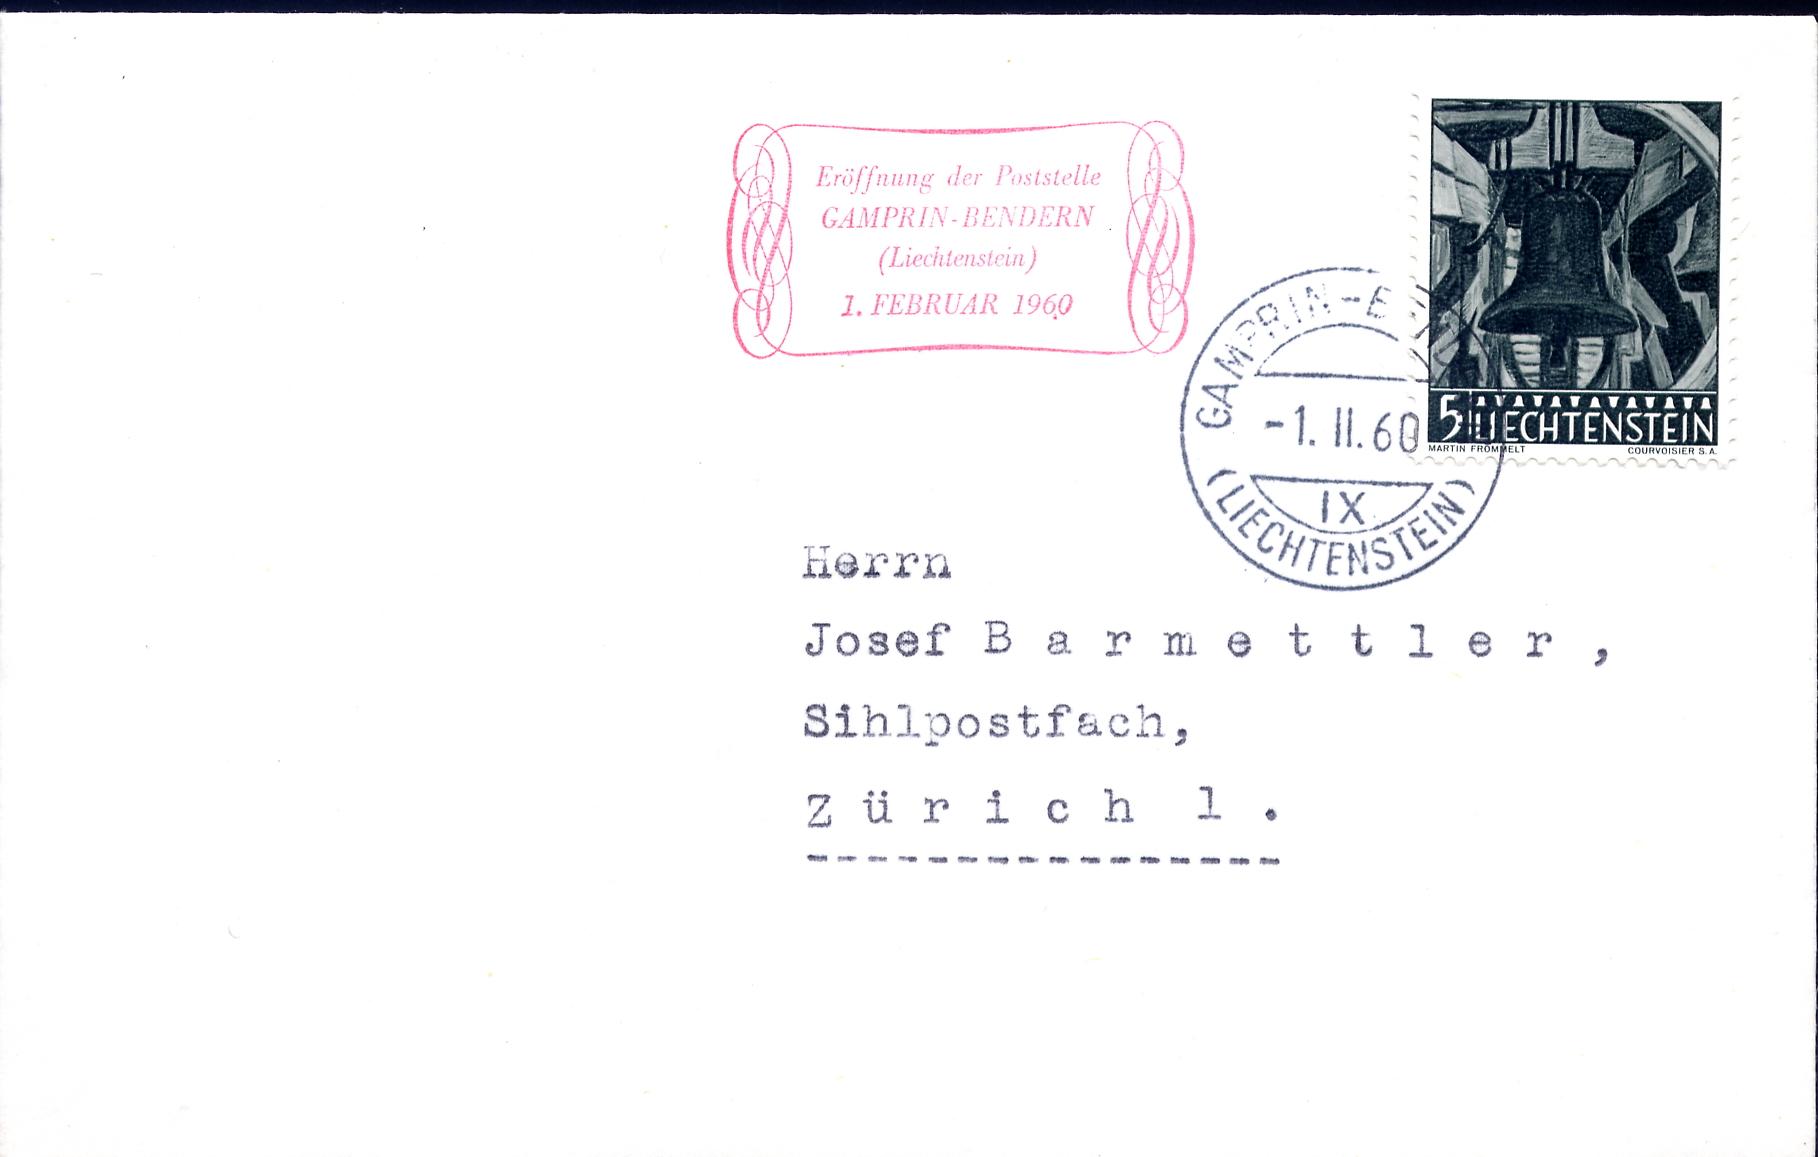 https://swiss-stamps.org/wp-content/uploads/2023/12/1960-2-Gamprin-Bendern.jpg